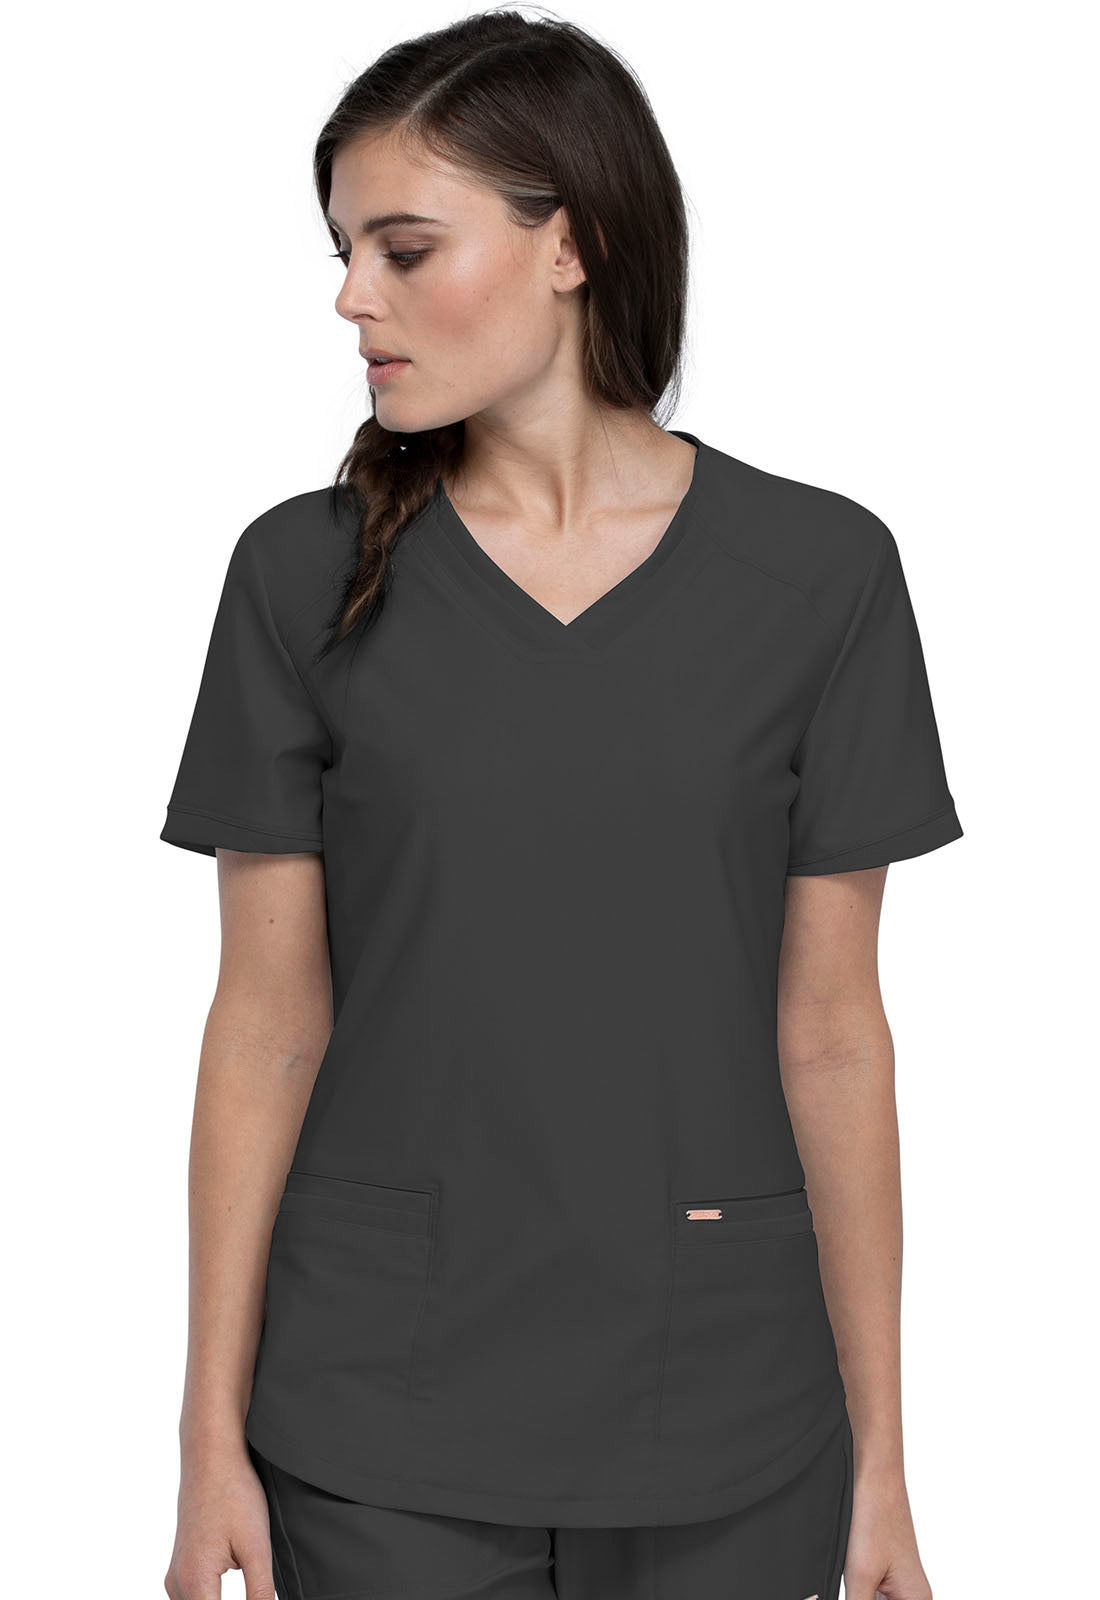 women's medical uniform tops, fashionable nurses uniforms, Women's Cherokee Form V-Neck Top